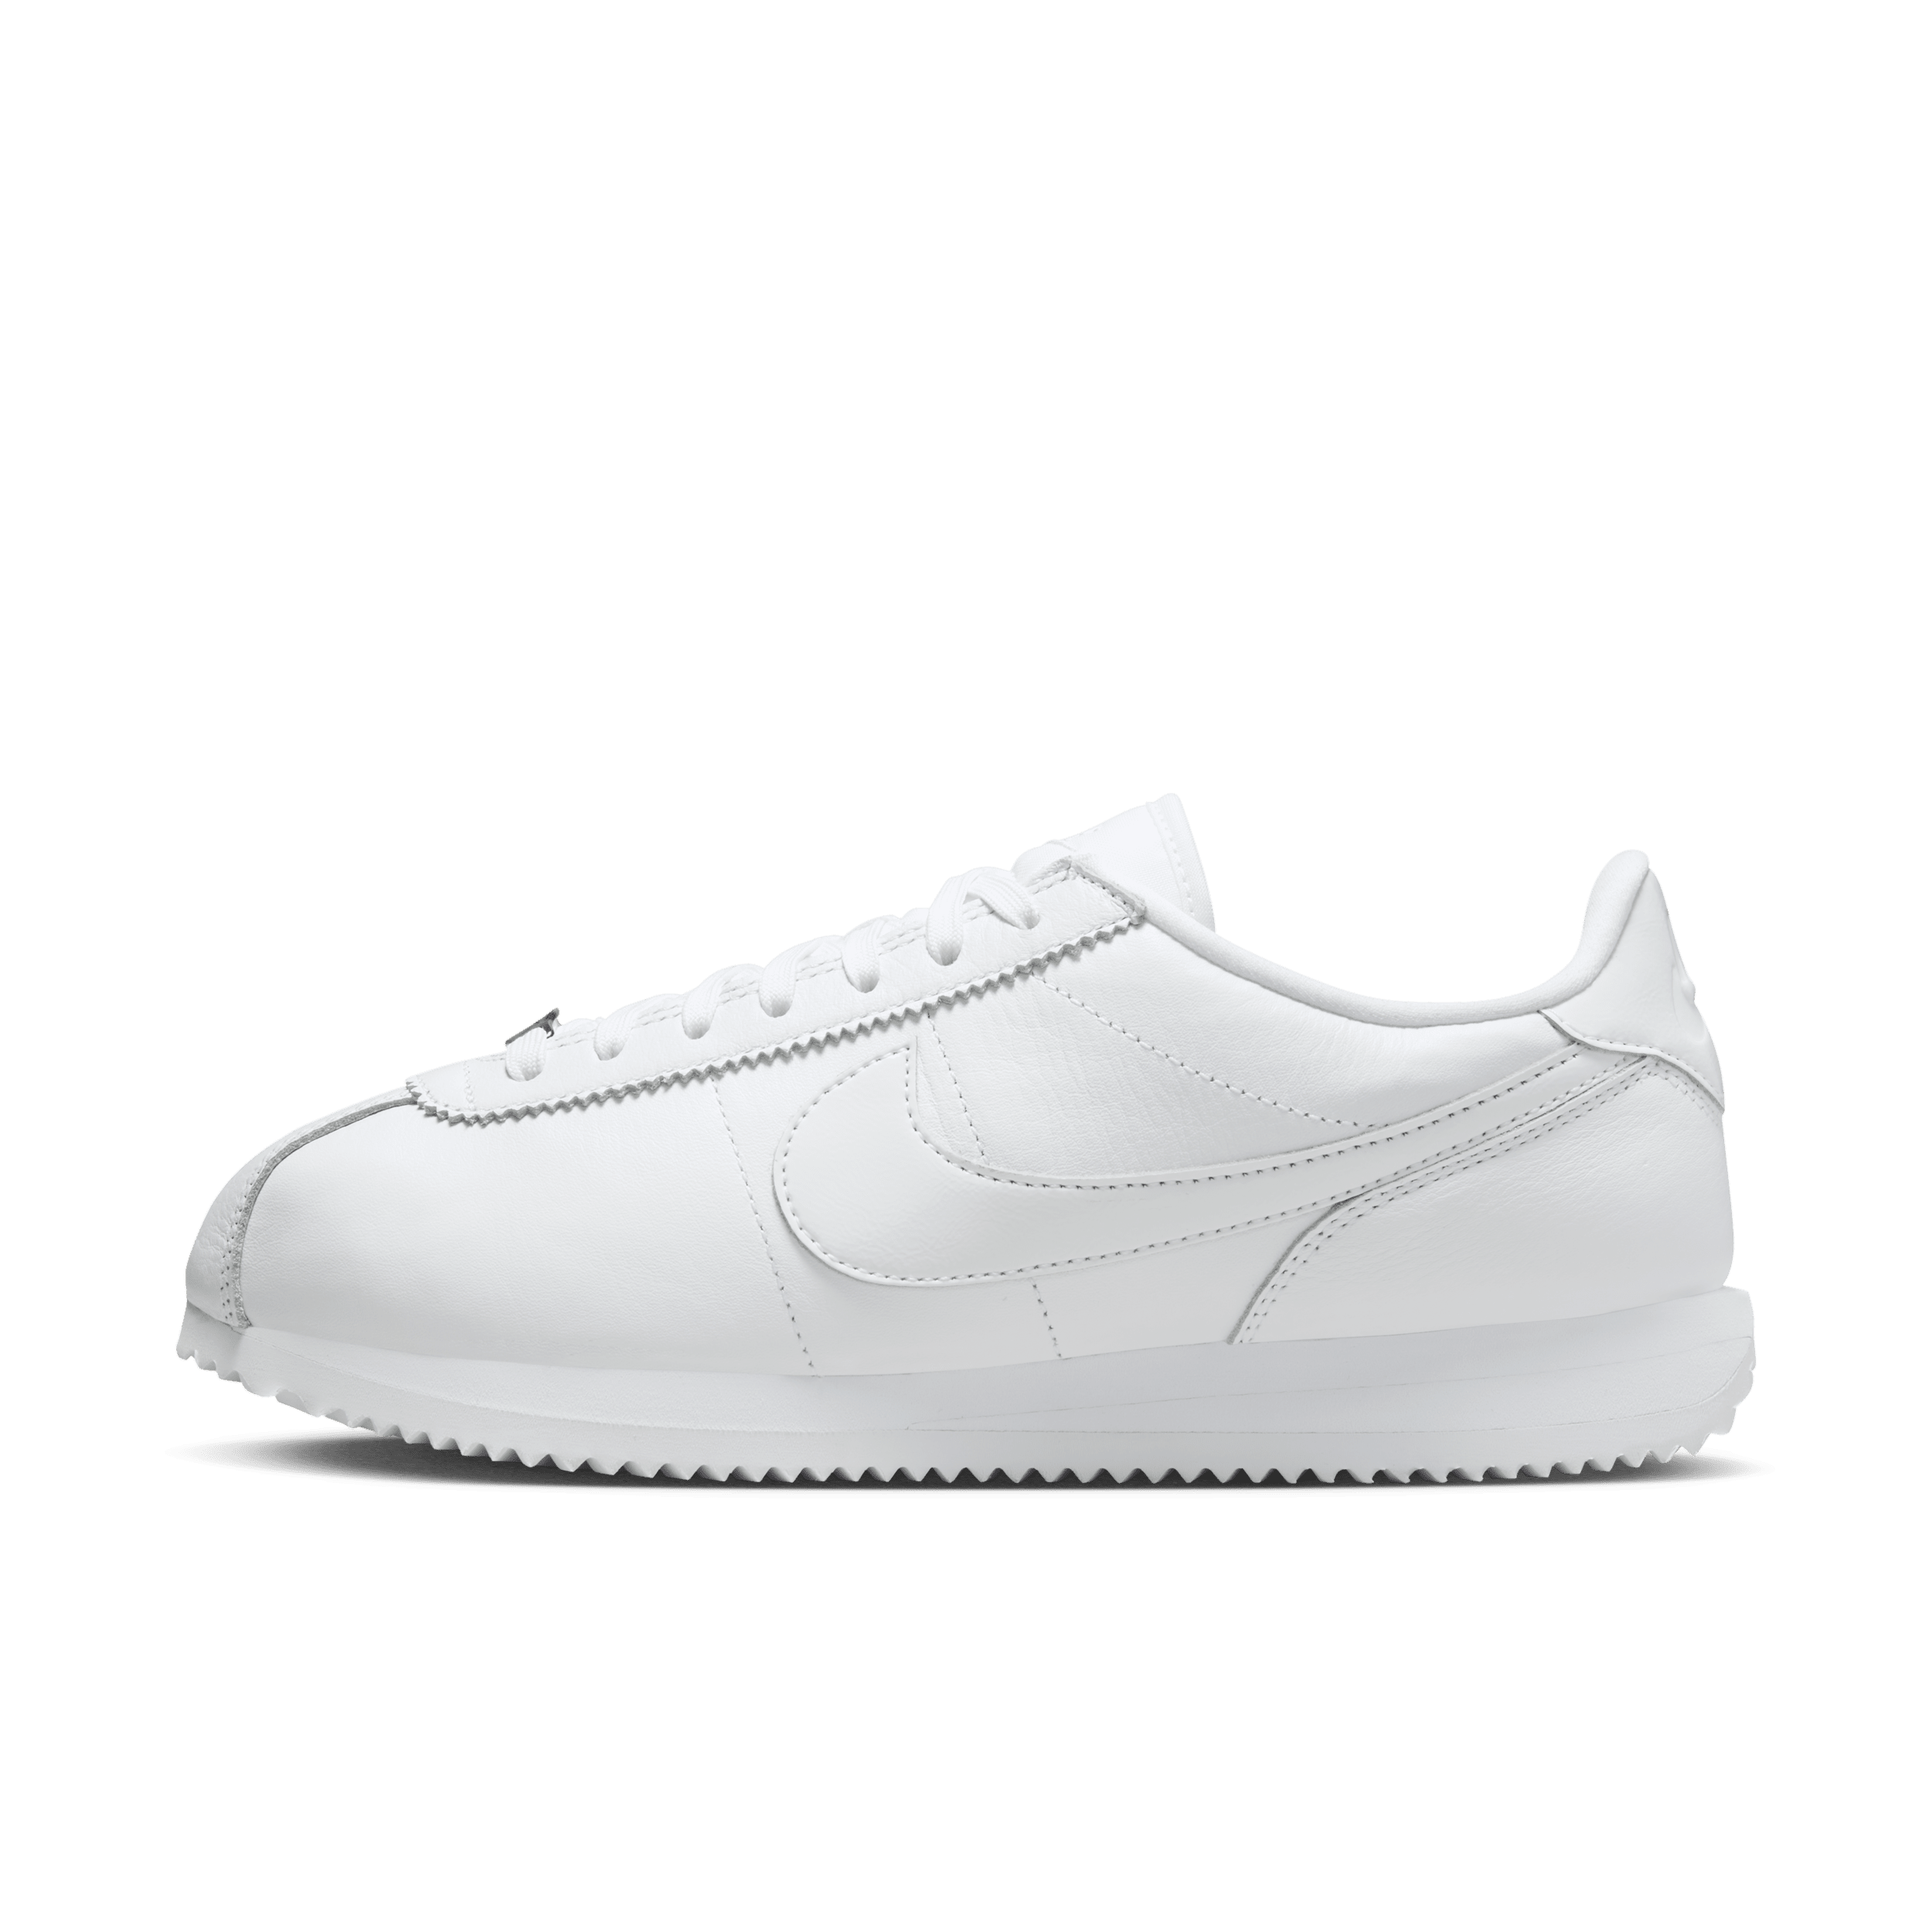 Nike Cortez 23 Premium Leather damesschoenen - Wit